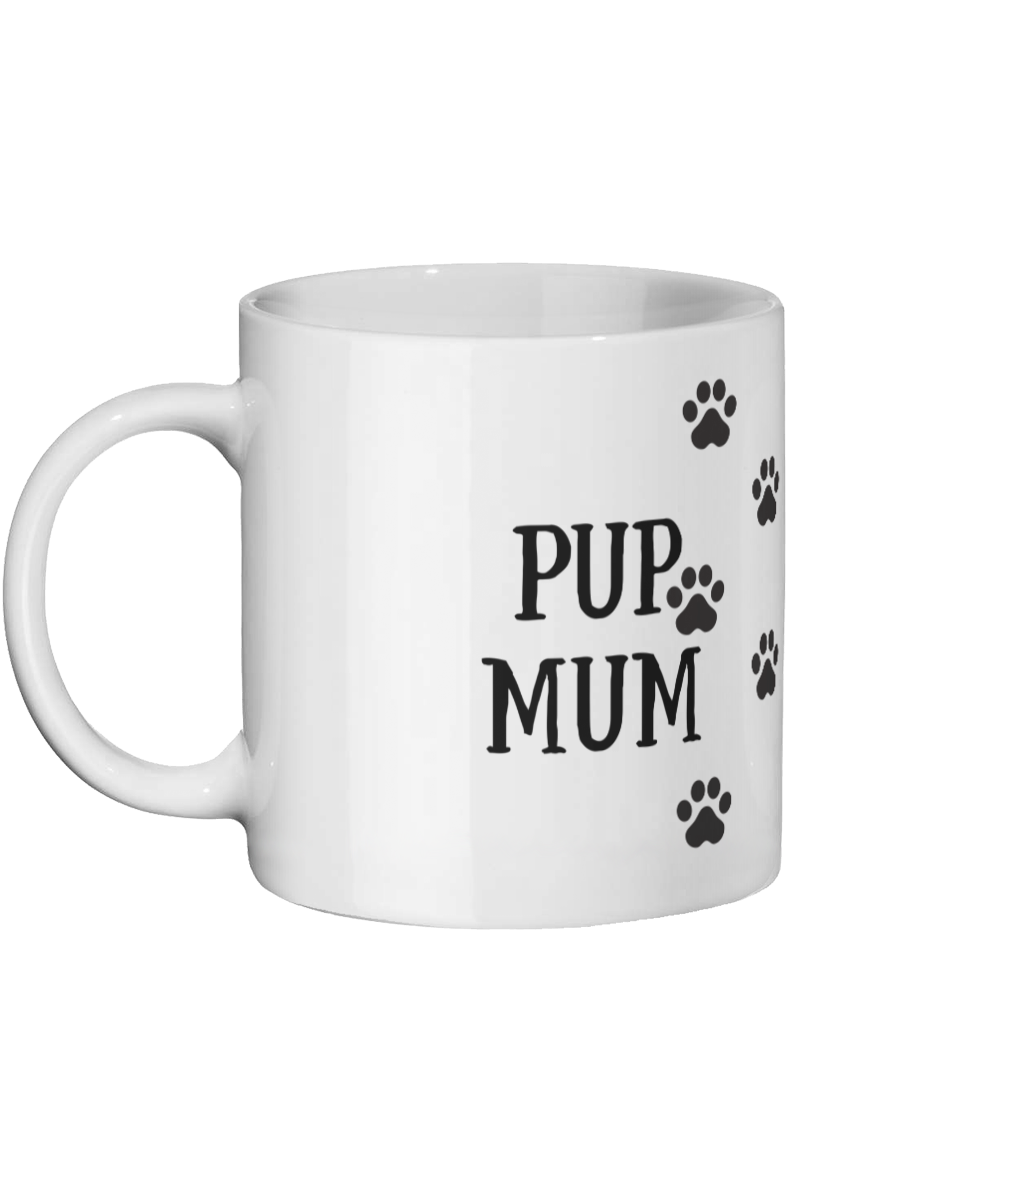 Pup Mum Mug Left-side